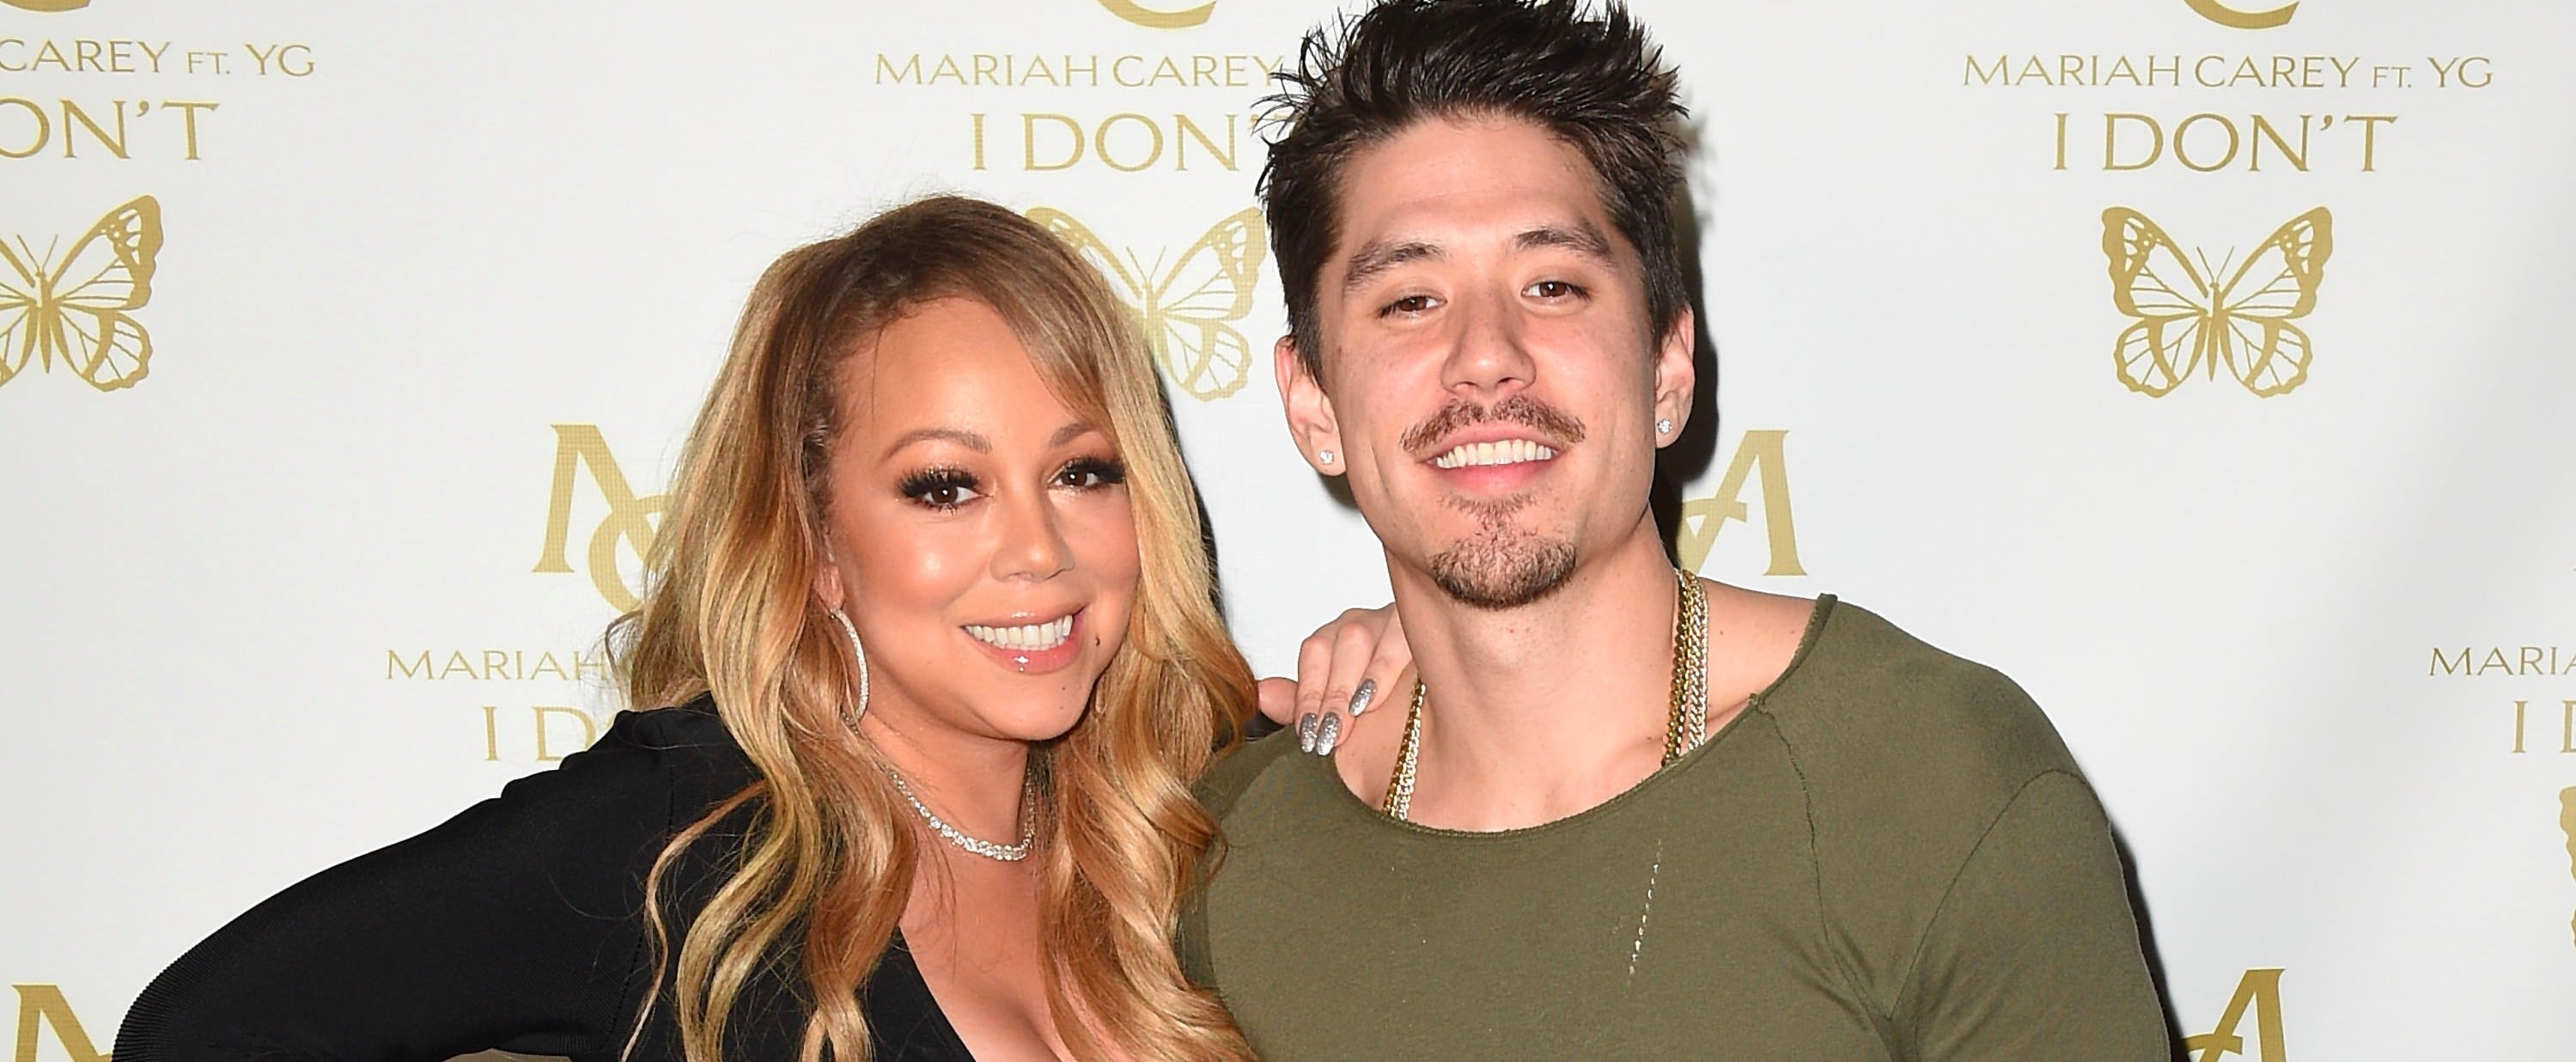 Mariah Carey and Bryan Tanaka Break Up | POPSUGAR Celebrity